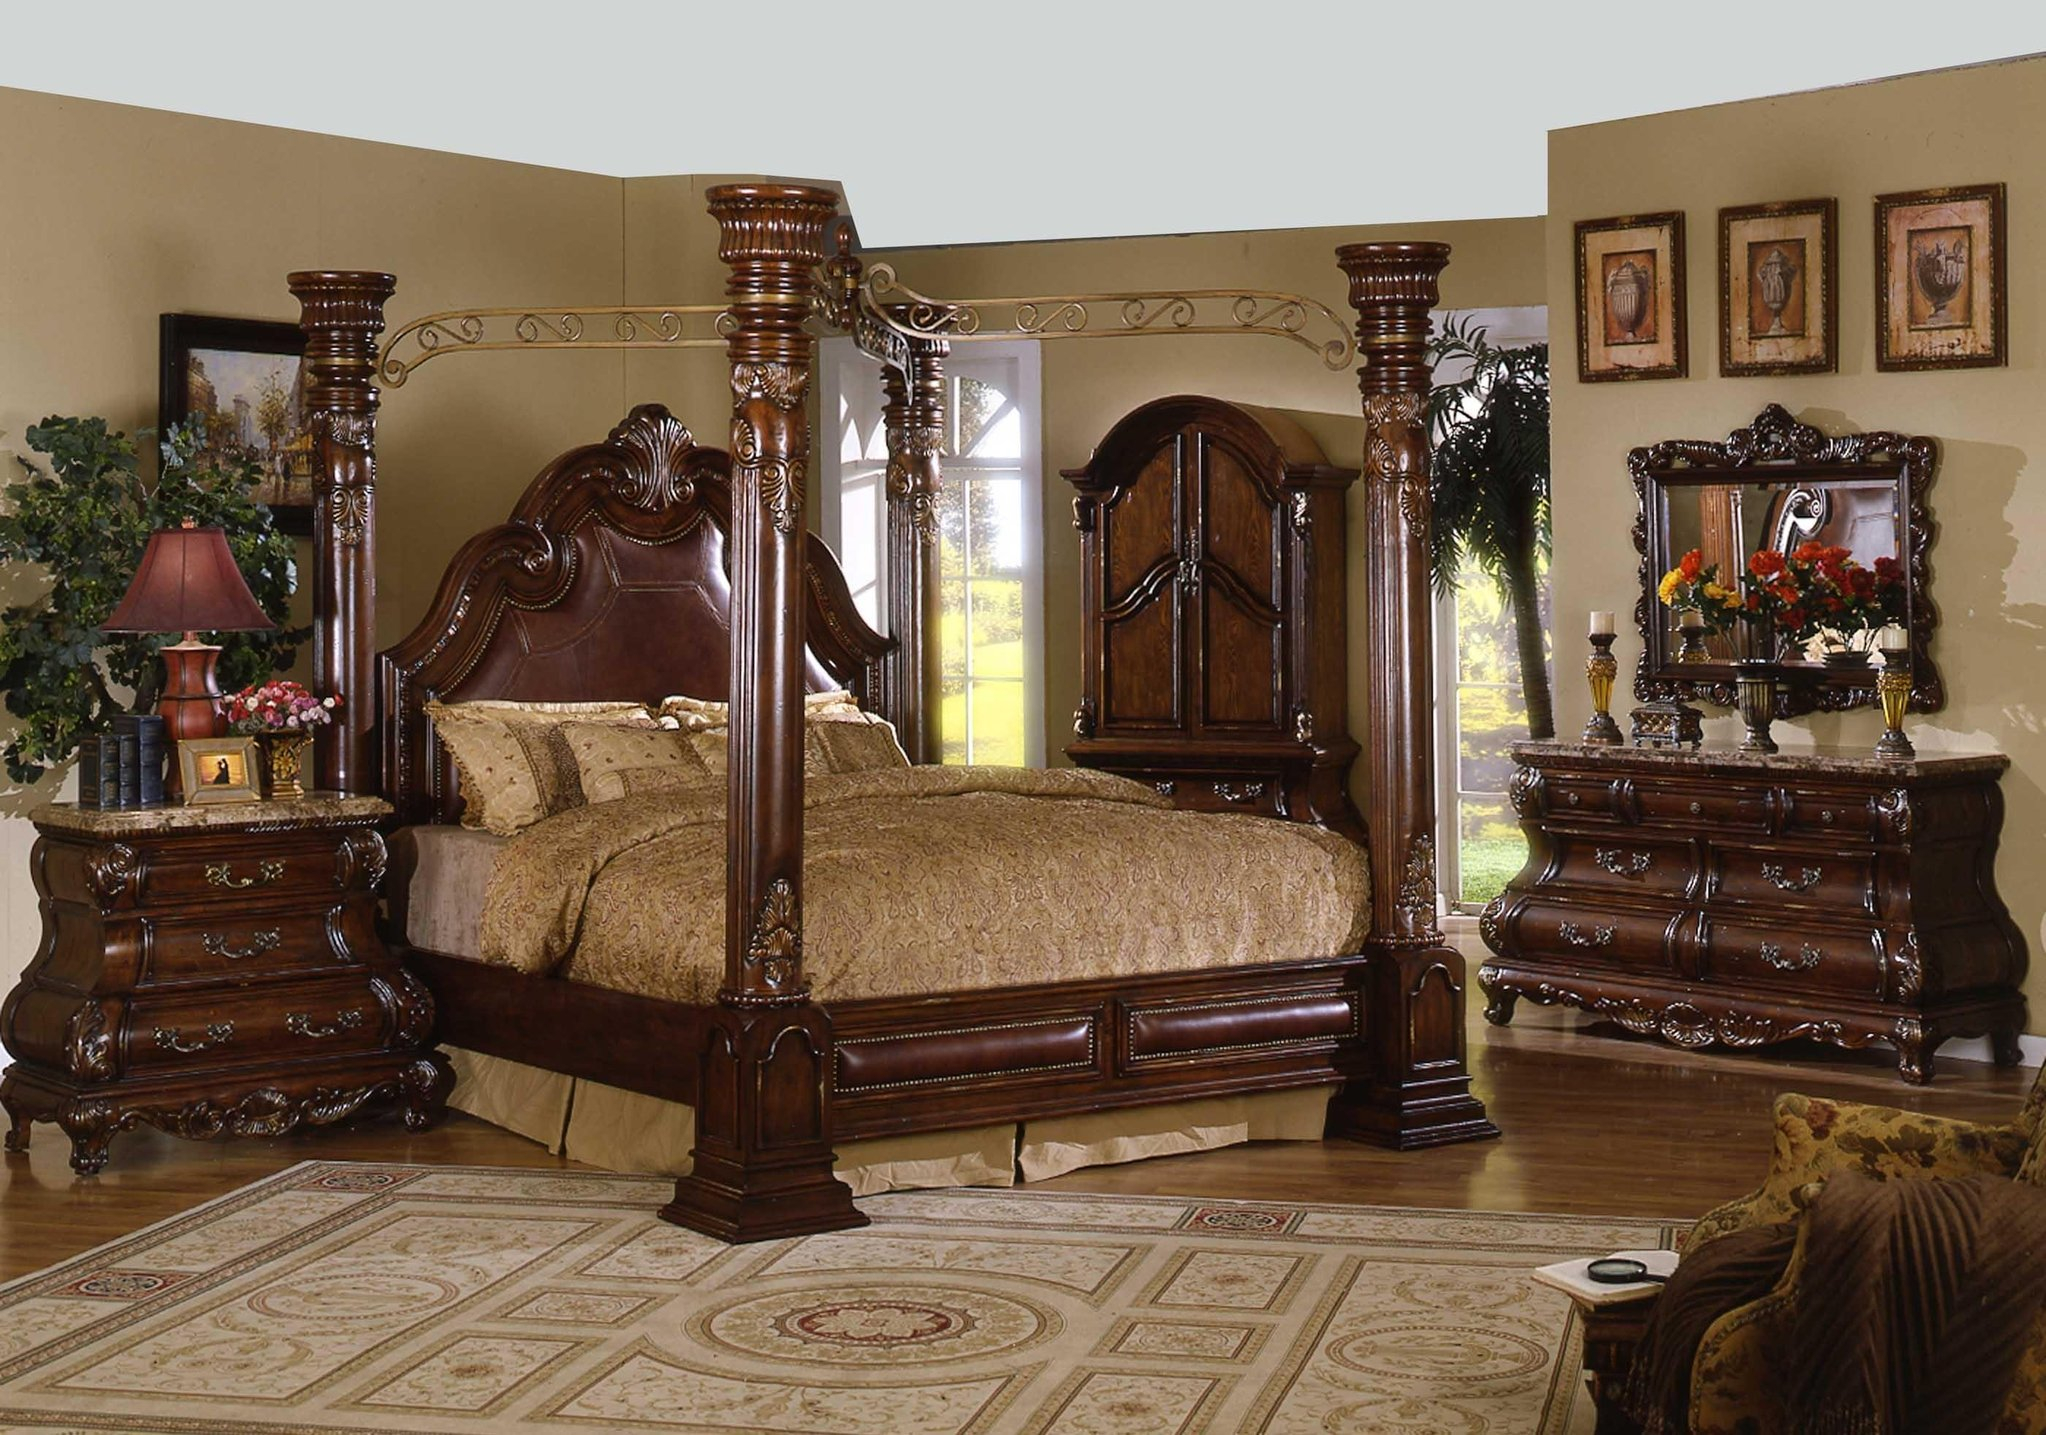 Bedroom Furniture Bedroom Sets Furniture Canopy Bed King Queen inside sizing 2046 X 1435